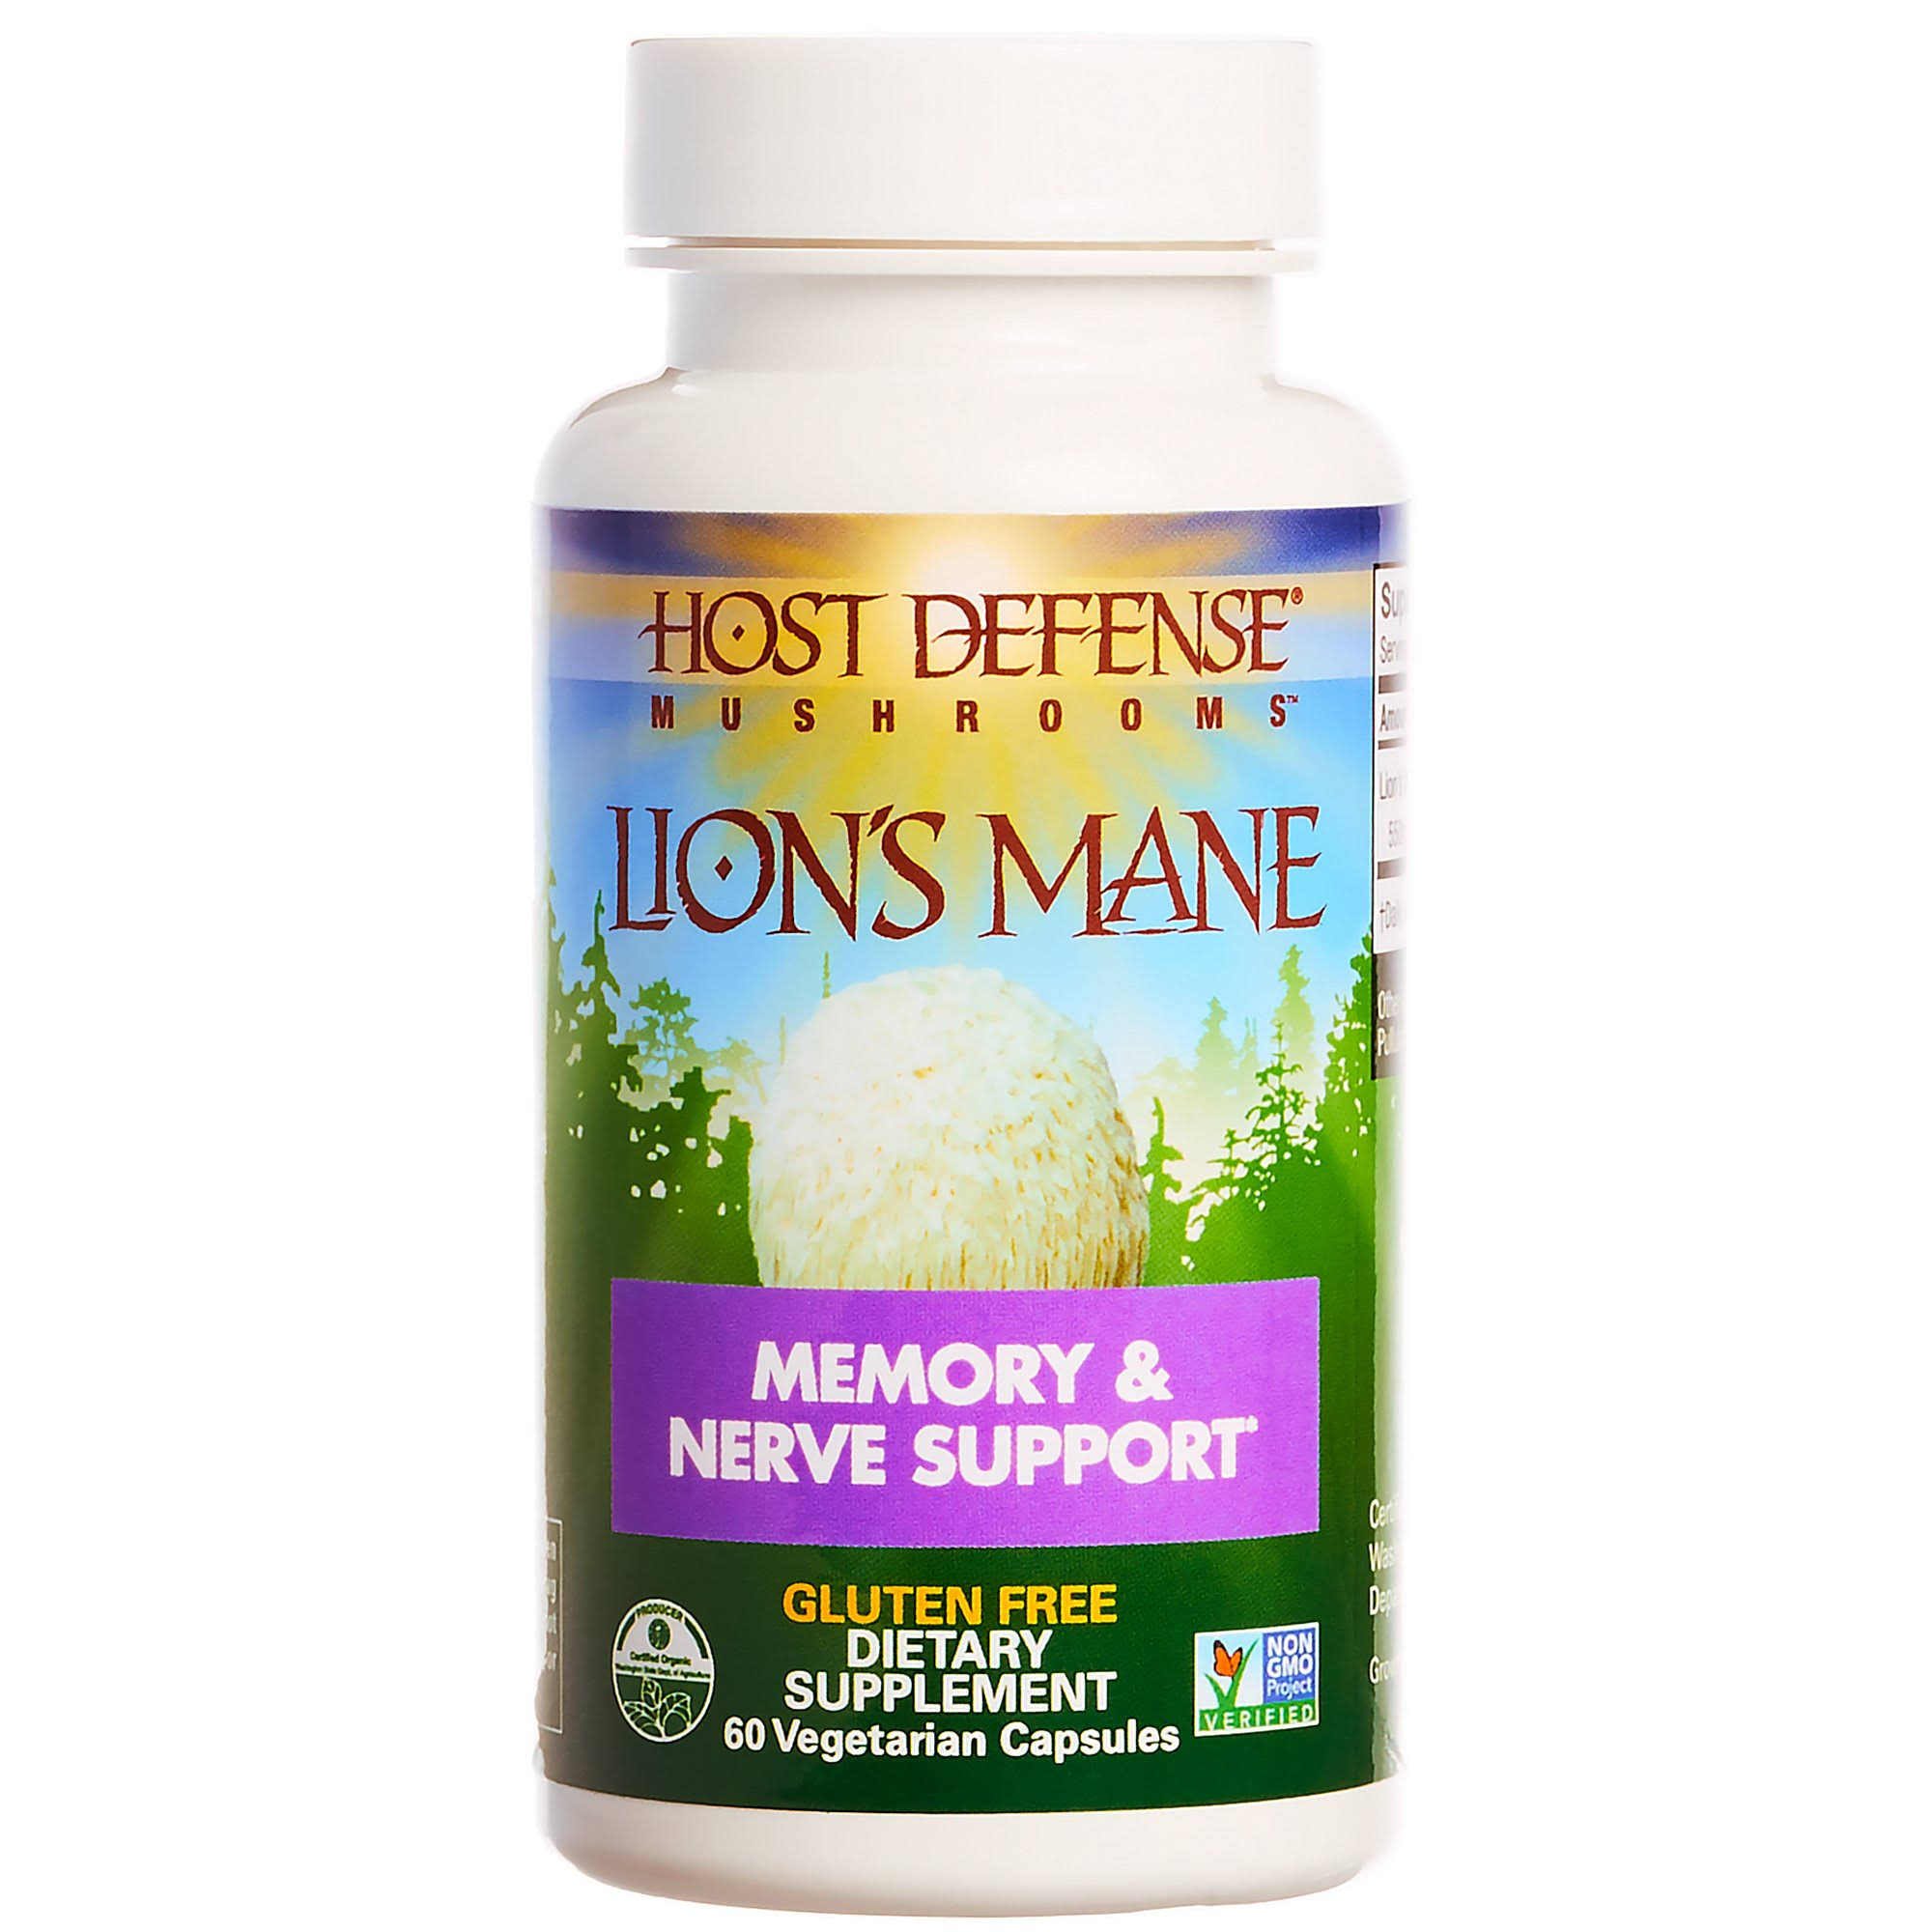 Host Defense Lion's Mane Memory & Nerve Support Dietary Supplement - 60 Capsules